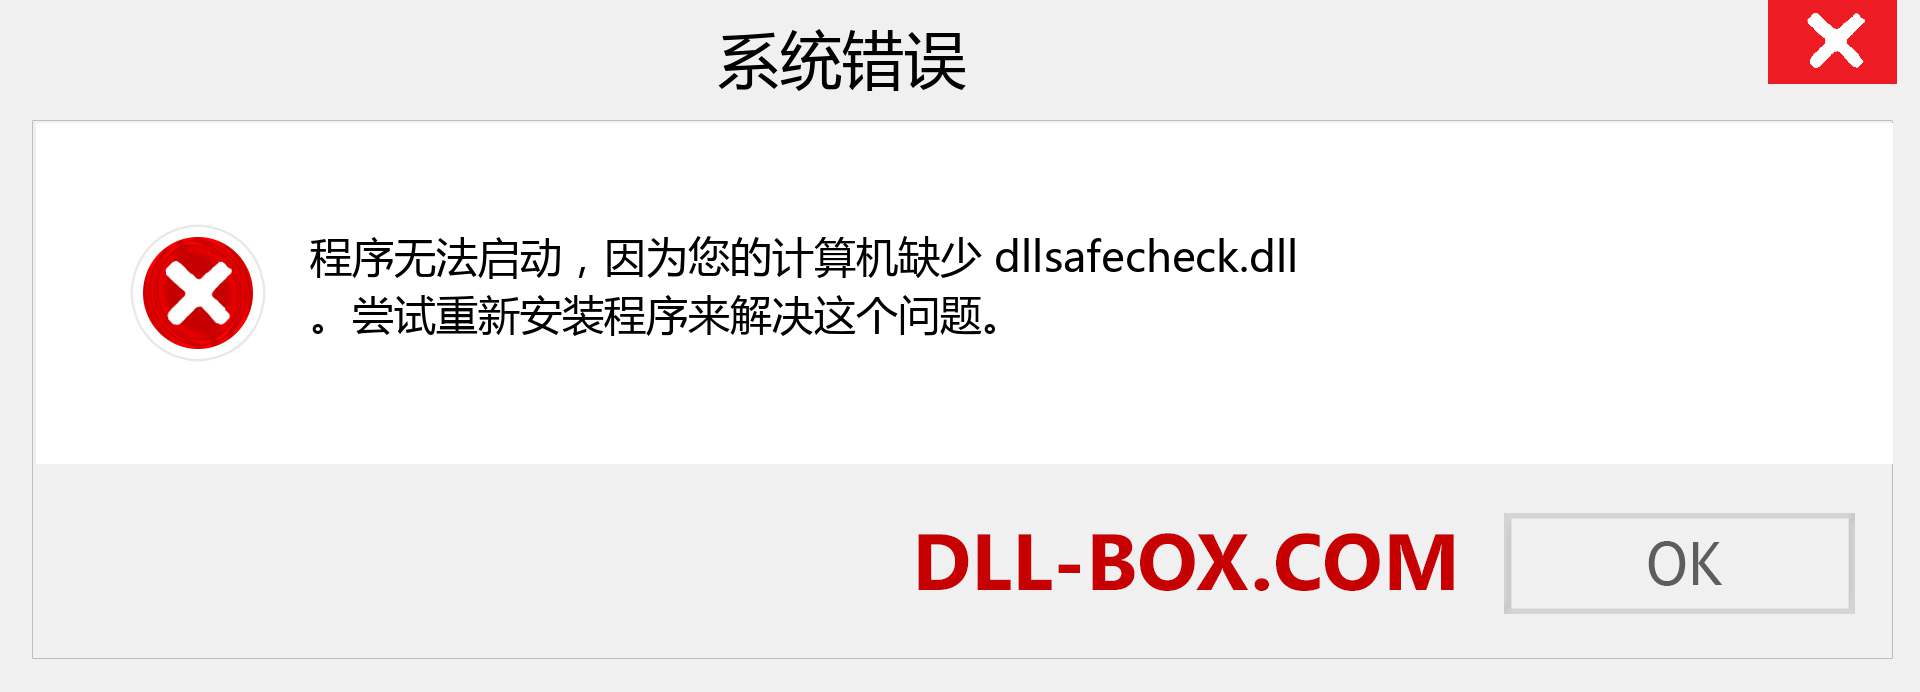 dllsafecheck.dll 文件丢失？。 适用于 Windows 7、8、10 的下载 - 修复 Windows、照片、图像上的 dllsafecheck dll 丢失错误